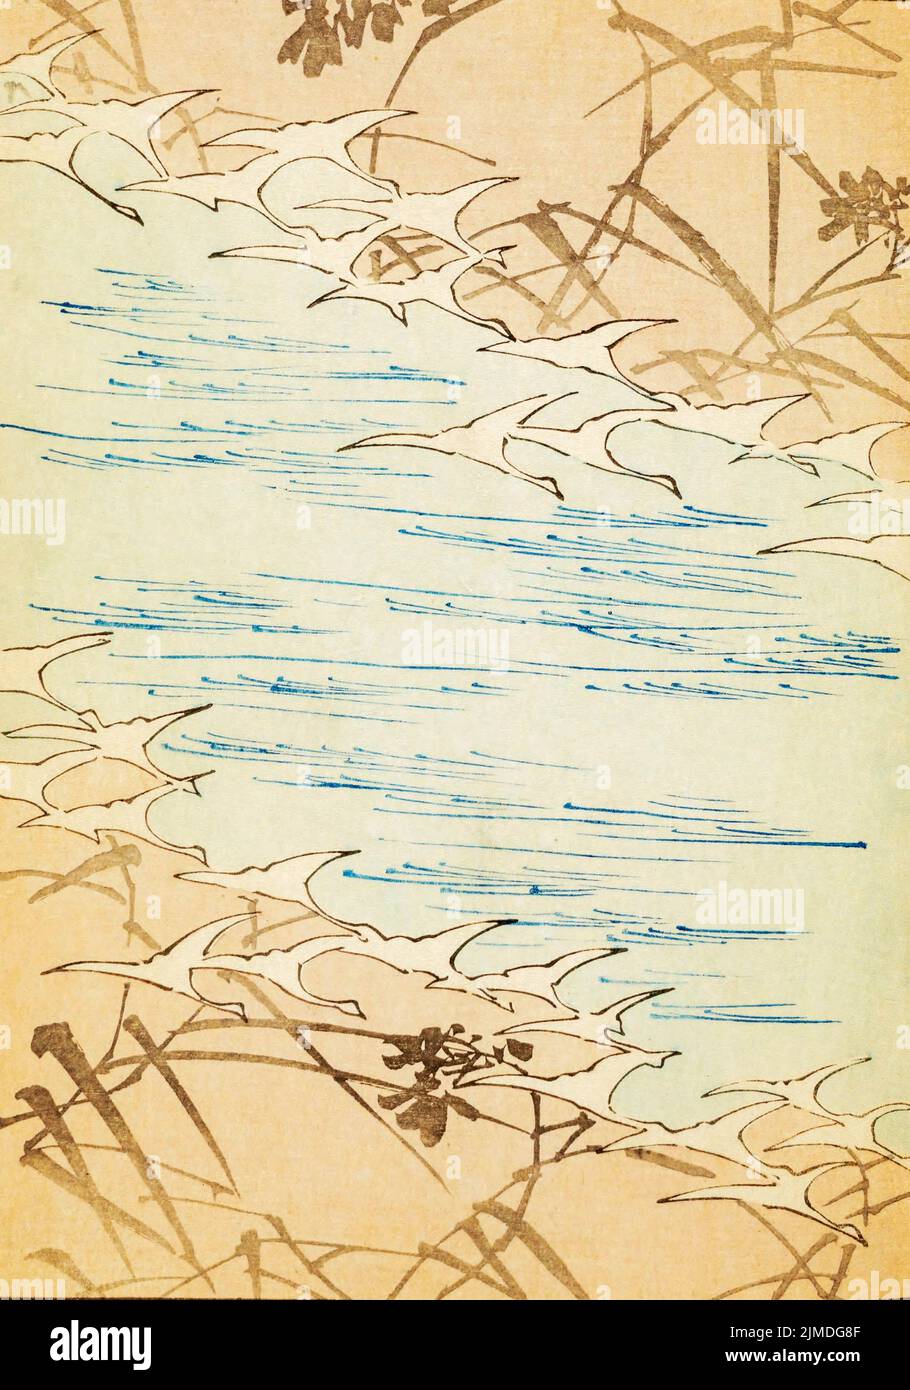 Retro Japanese art design background with birds, stream Stock Photo